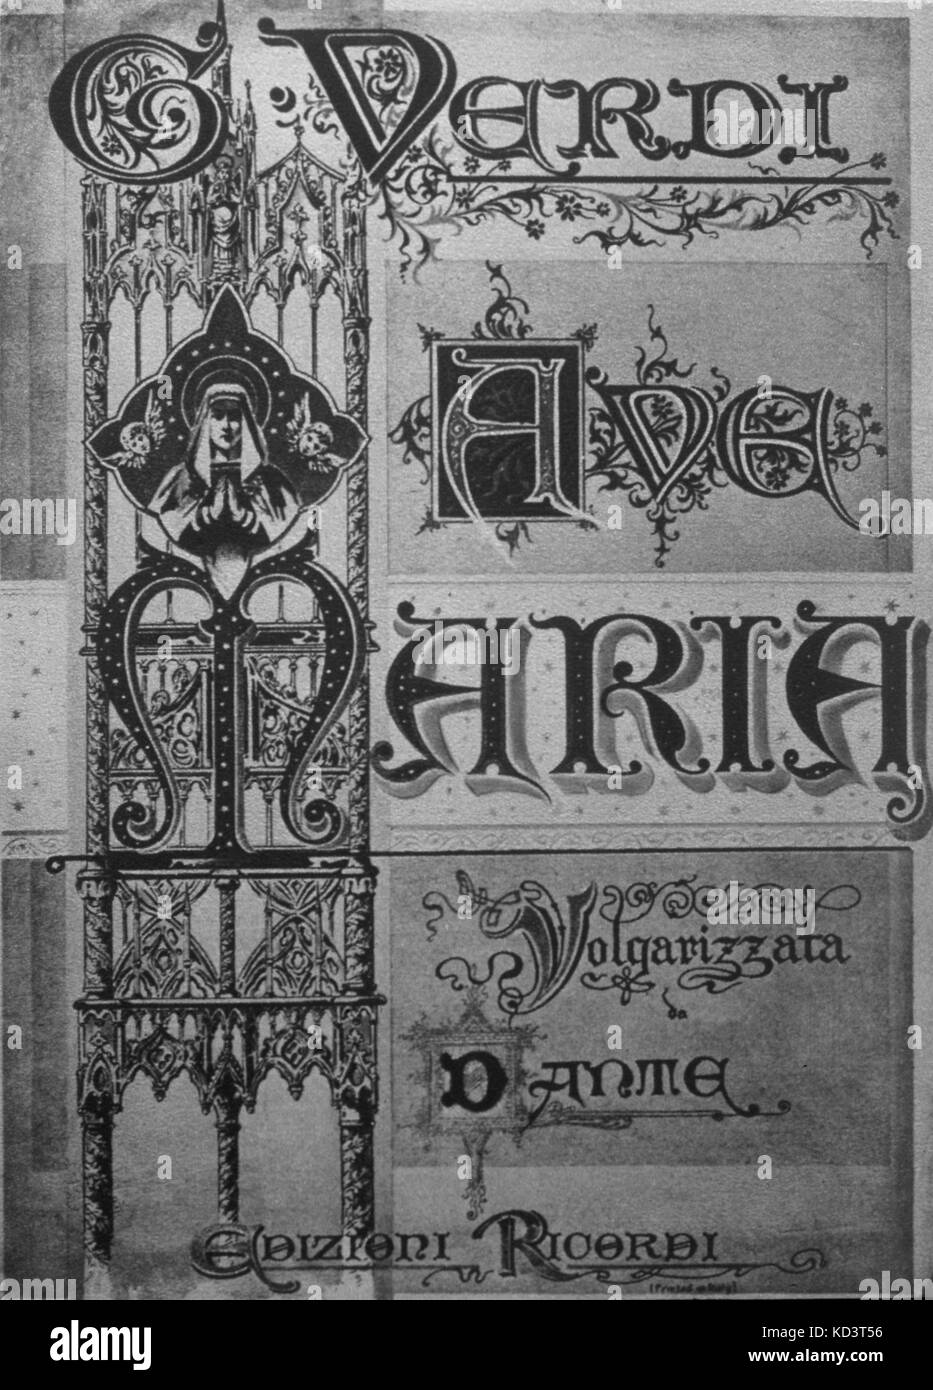 VERDI - AVE MARIA  - TITLEPAGE OF AVE MARIA Ricordi Edition, translated by Dante. Italian composer (1813-1901) Stock Photo